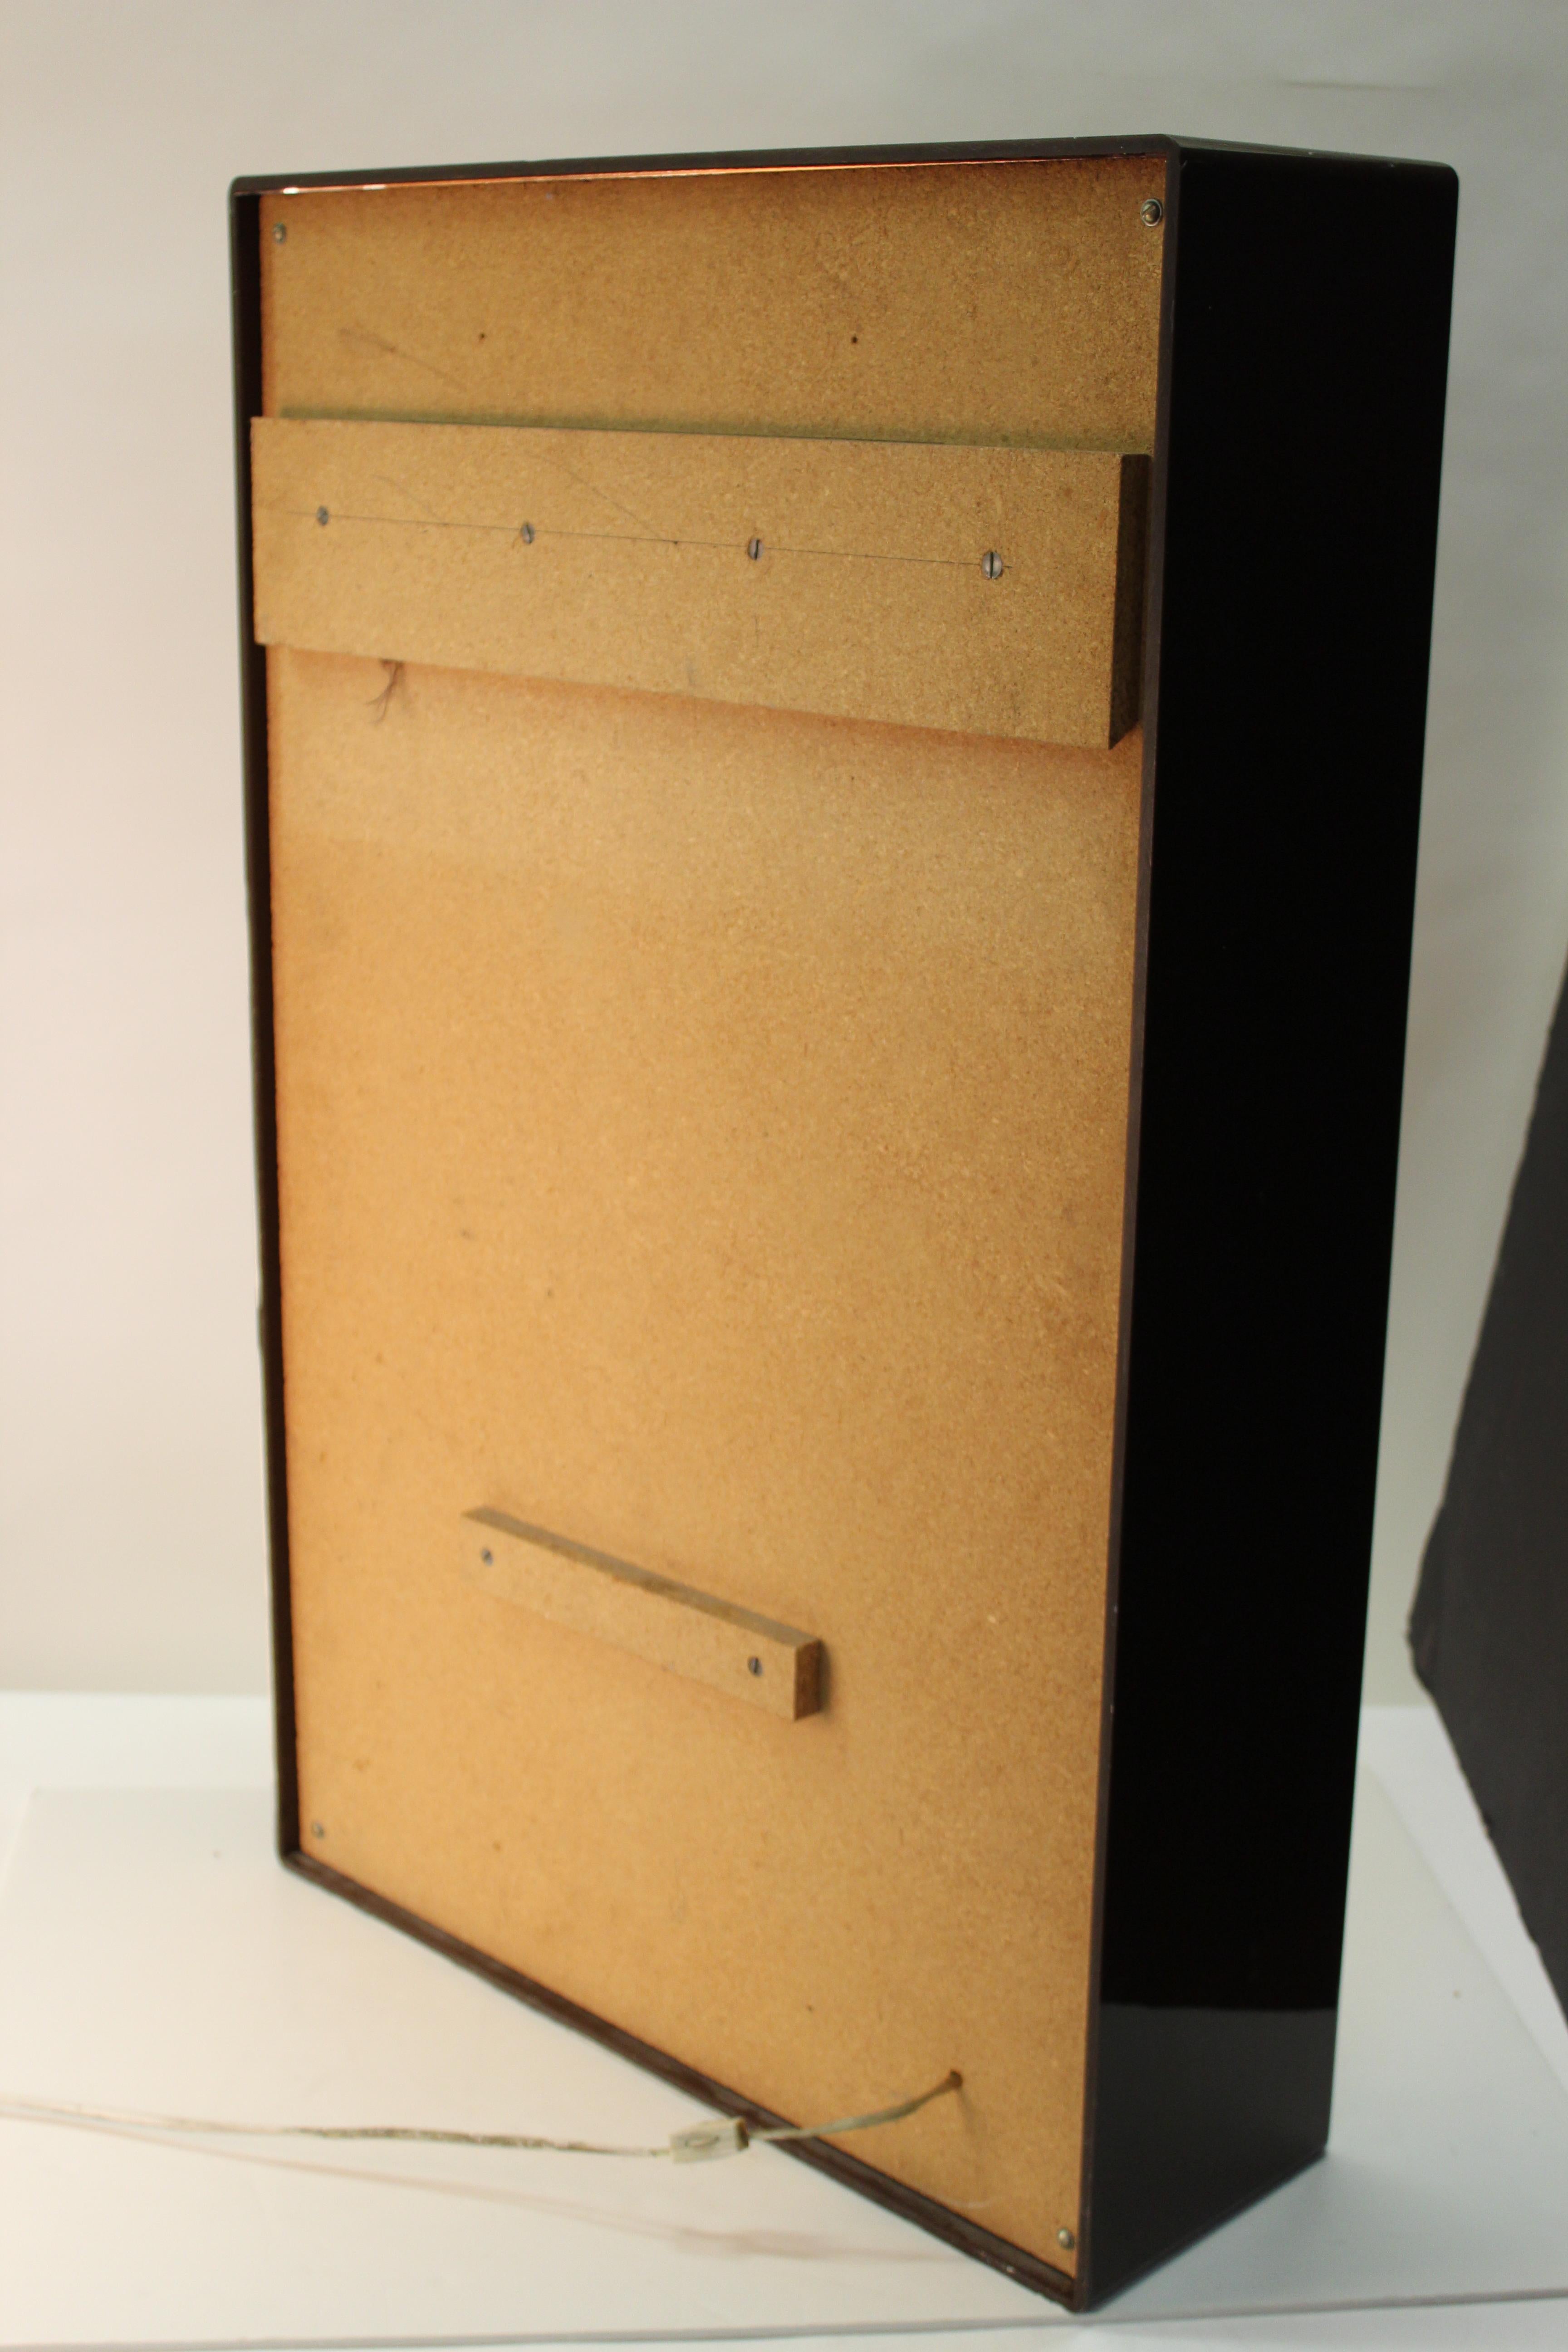 Modernist Light Box with Sculptural Interior, Signed Briglio 1